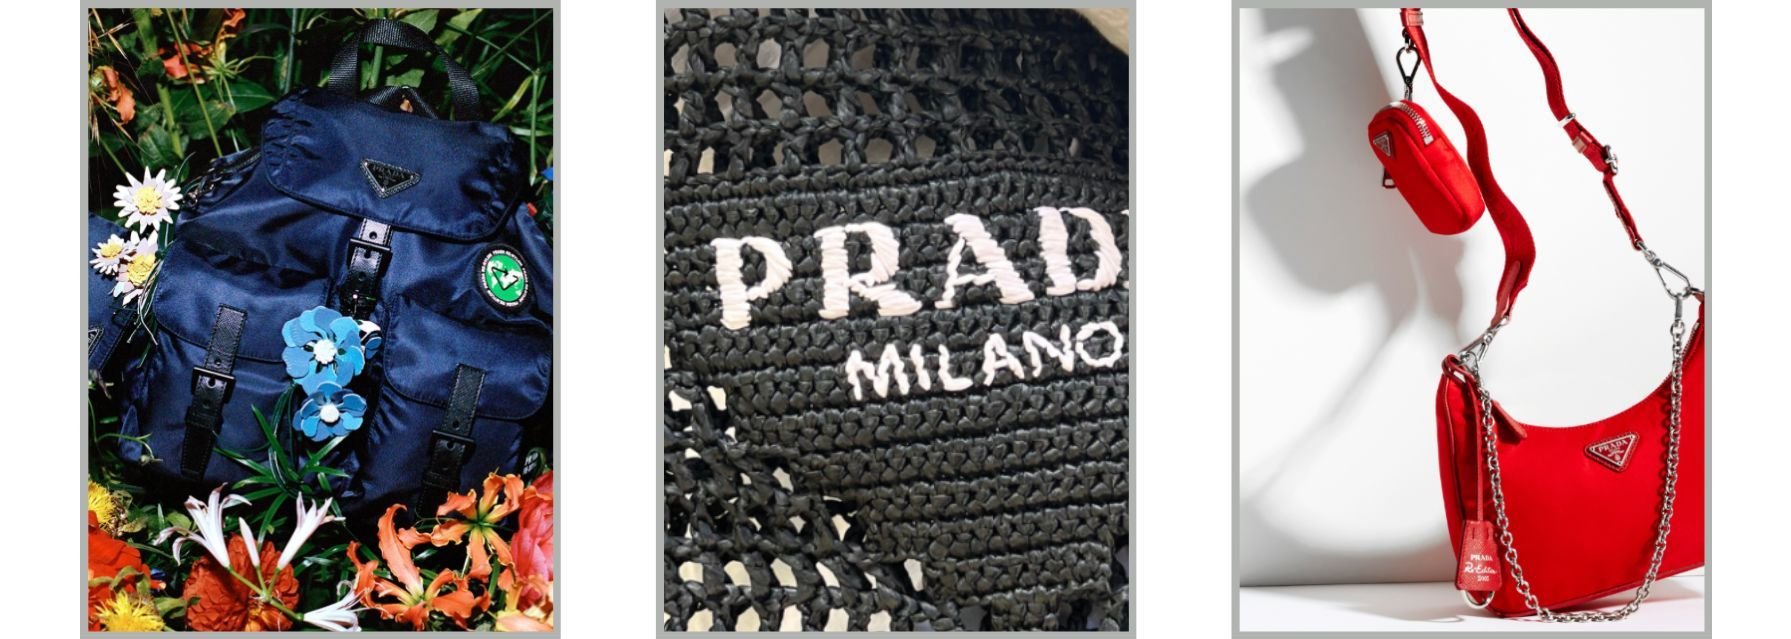 Celebrate 140 years of Prada with The Handbag Clinic